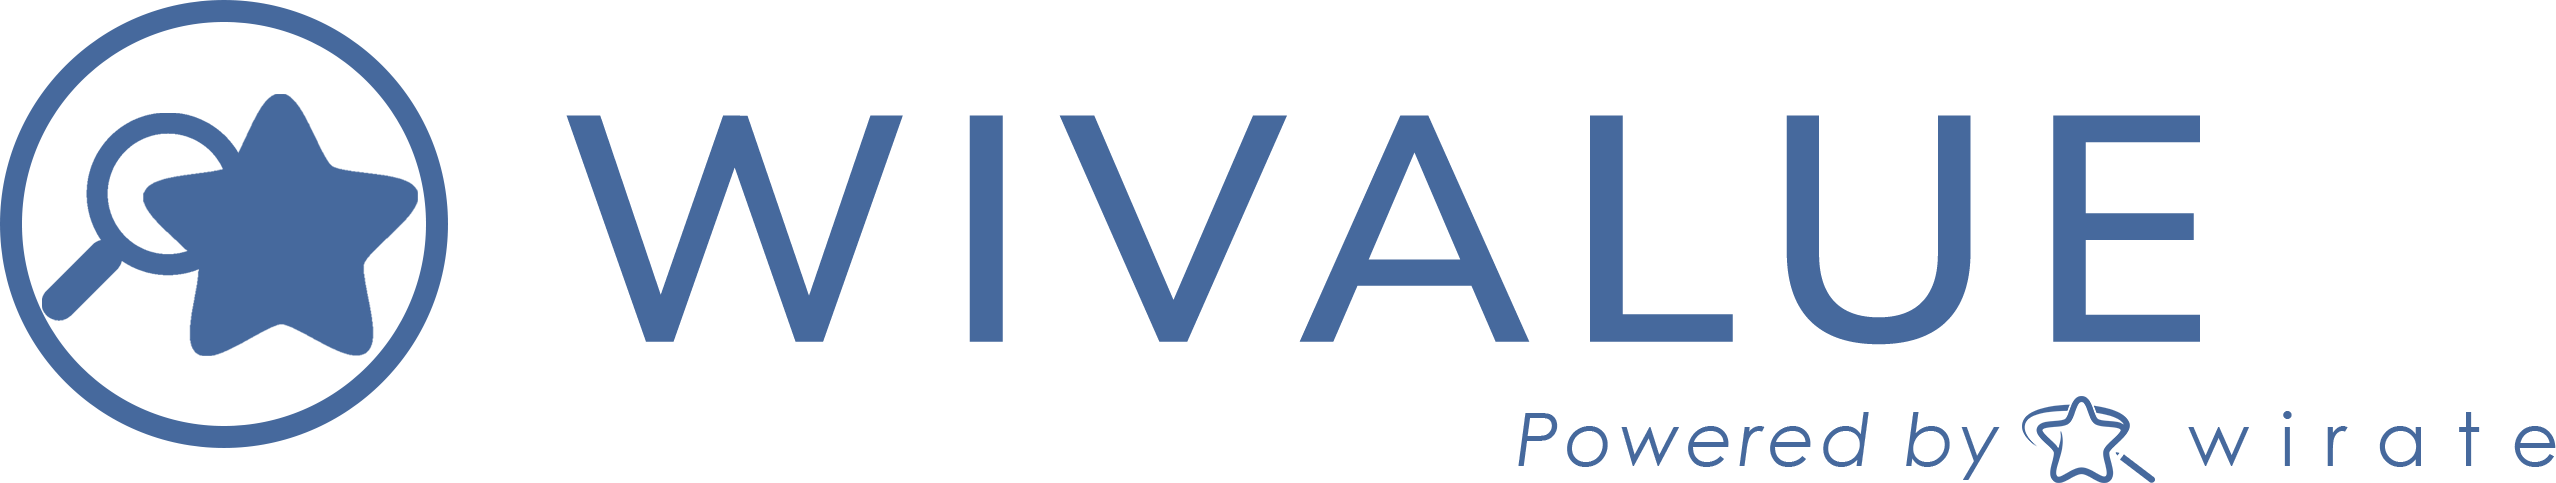 Wivalue logo